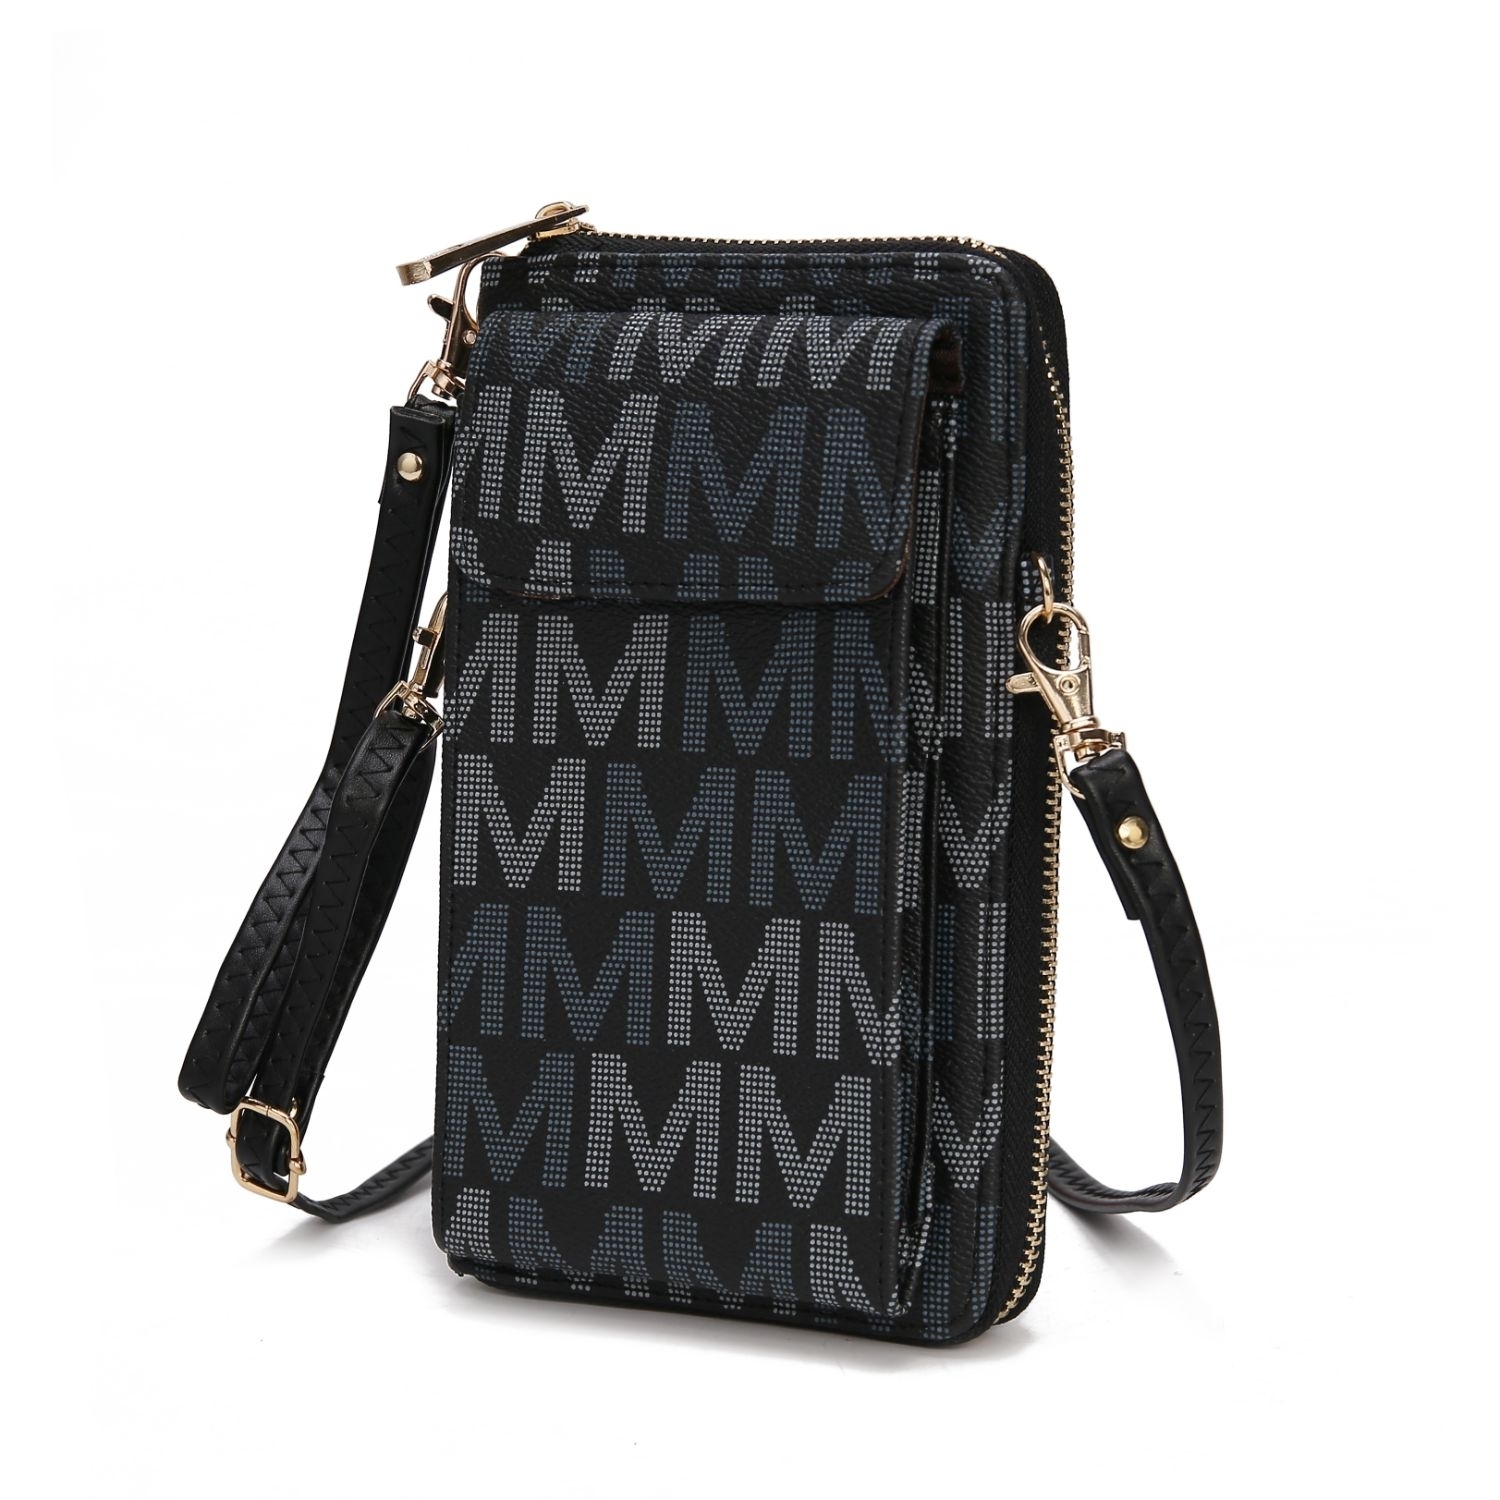 MKF Collection Cossetta Cell Phone Crossbody Handbag Wallet By Mia K. - Beige